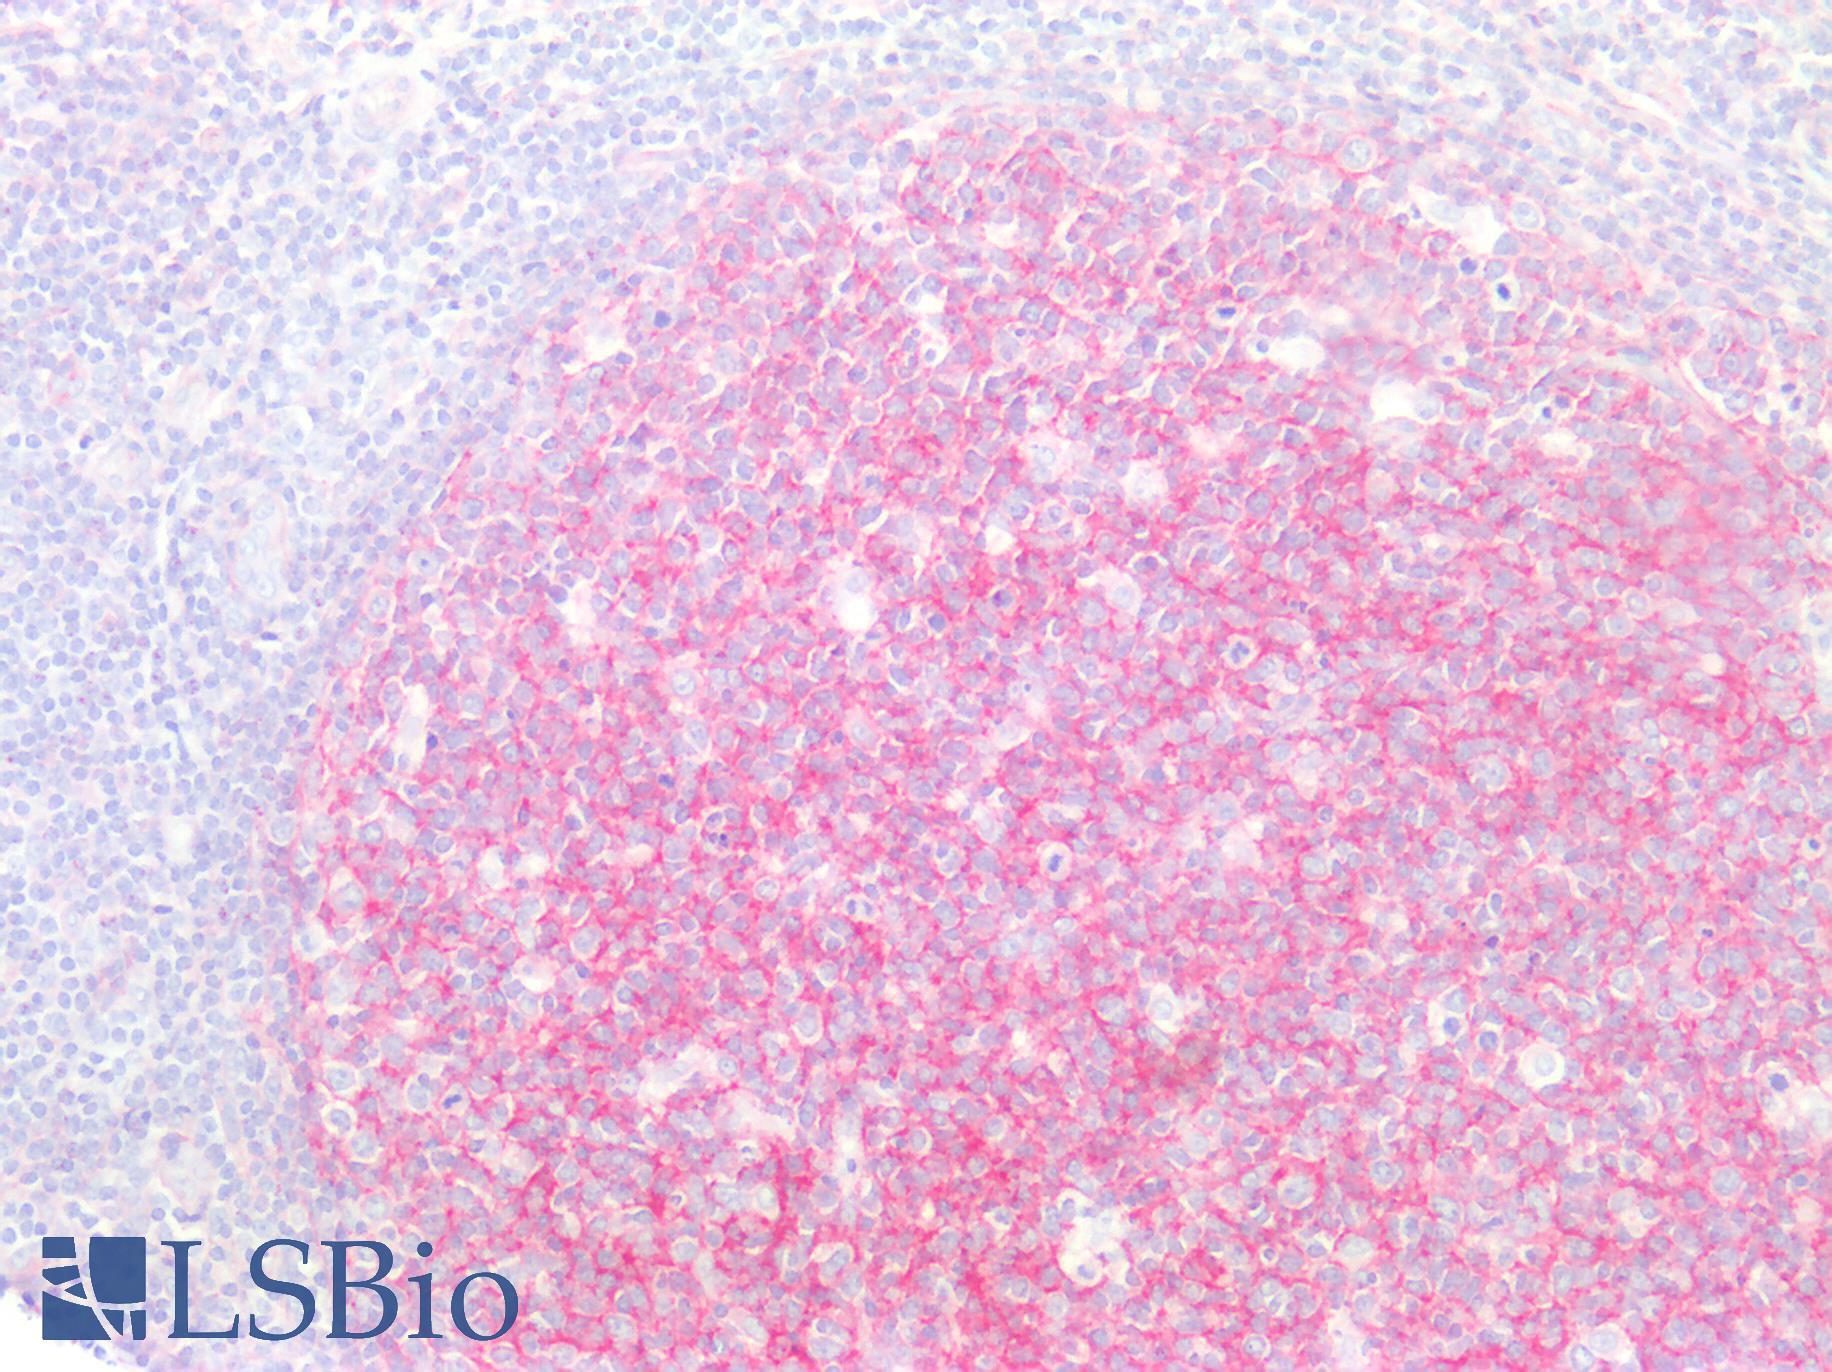 CD81 Antibody - Human Tonsil: Formalin-Fixed, Paraffin-Embedded (FFPE)